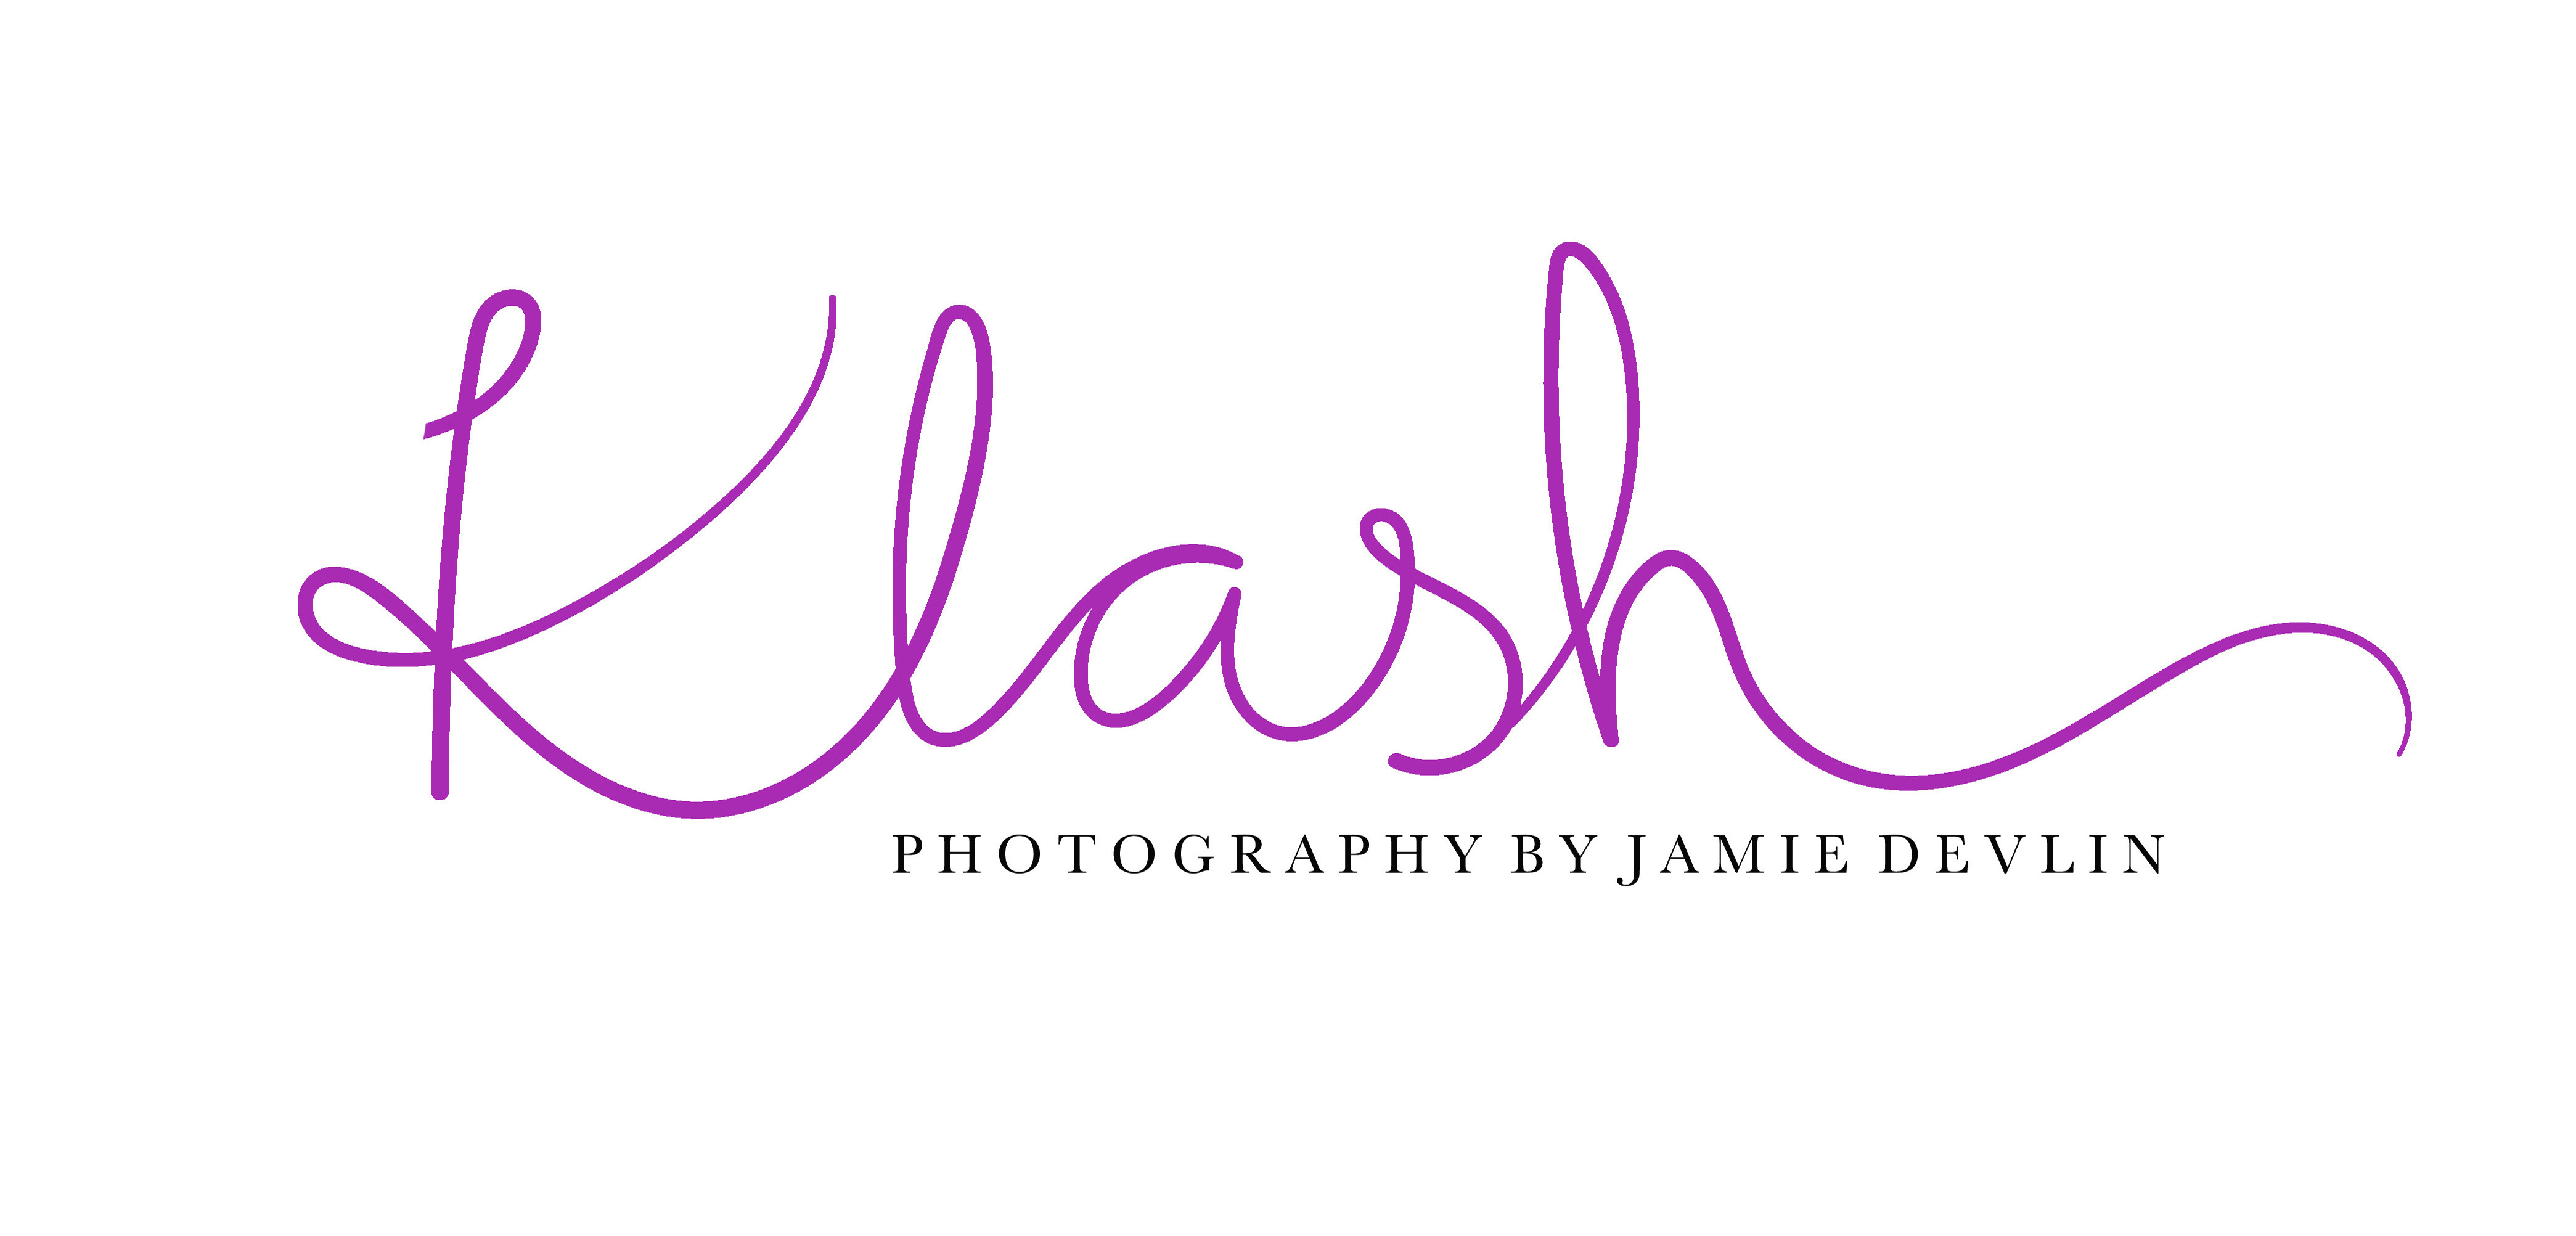 Klash Photography - Newborn and Baby Photographer based in Lowestoft, Suffolk.'s logo